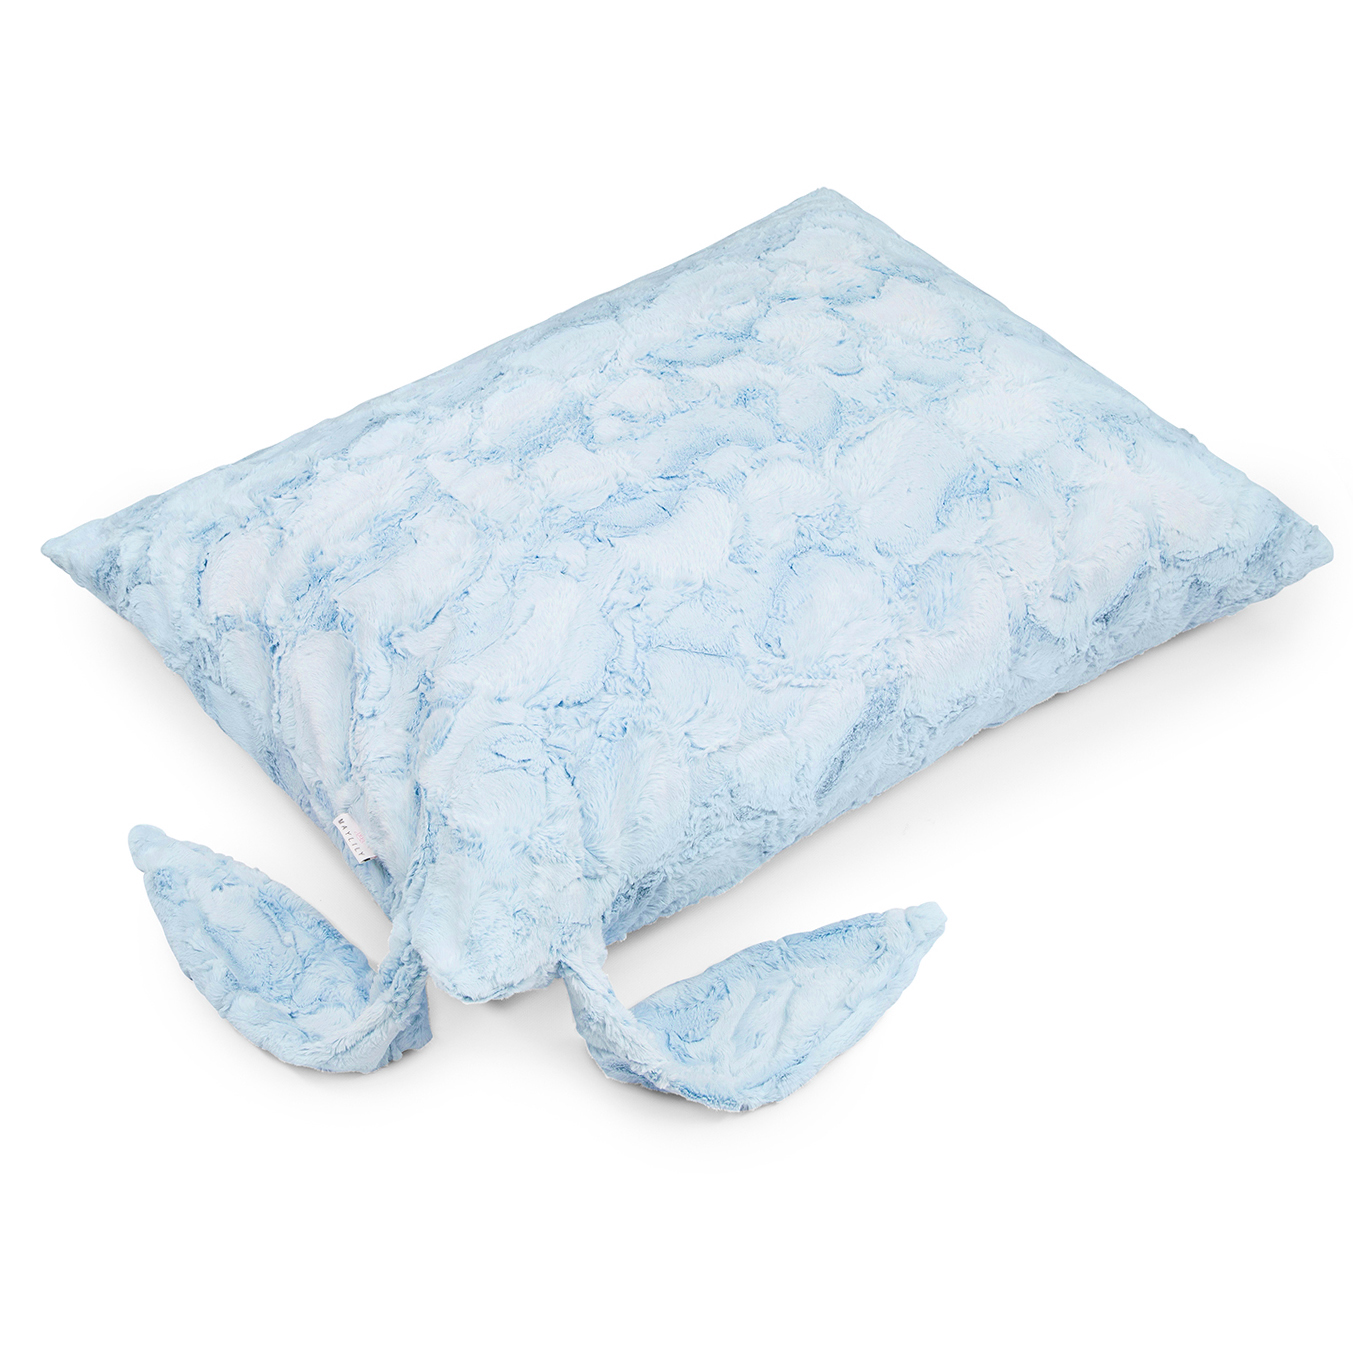 Bunny pillow XXL - Baby blue